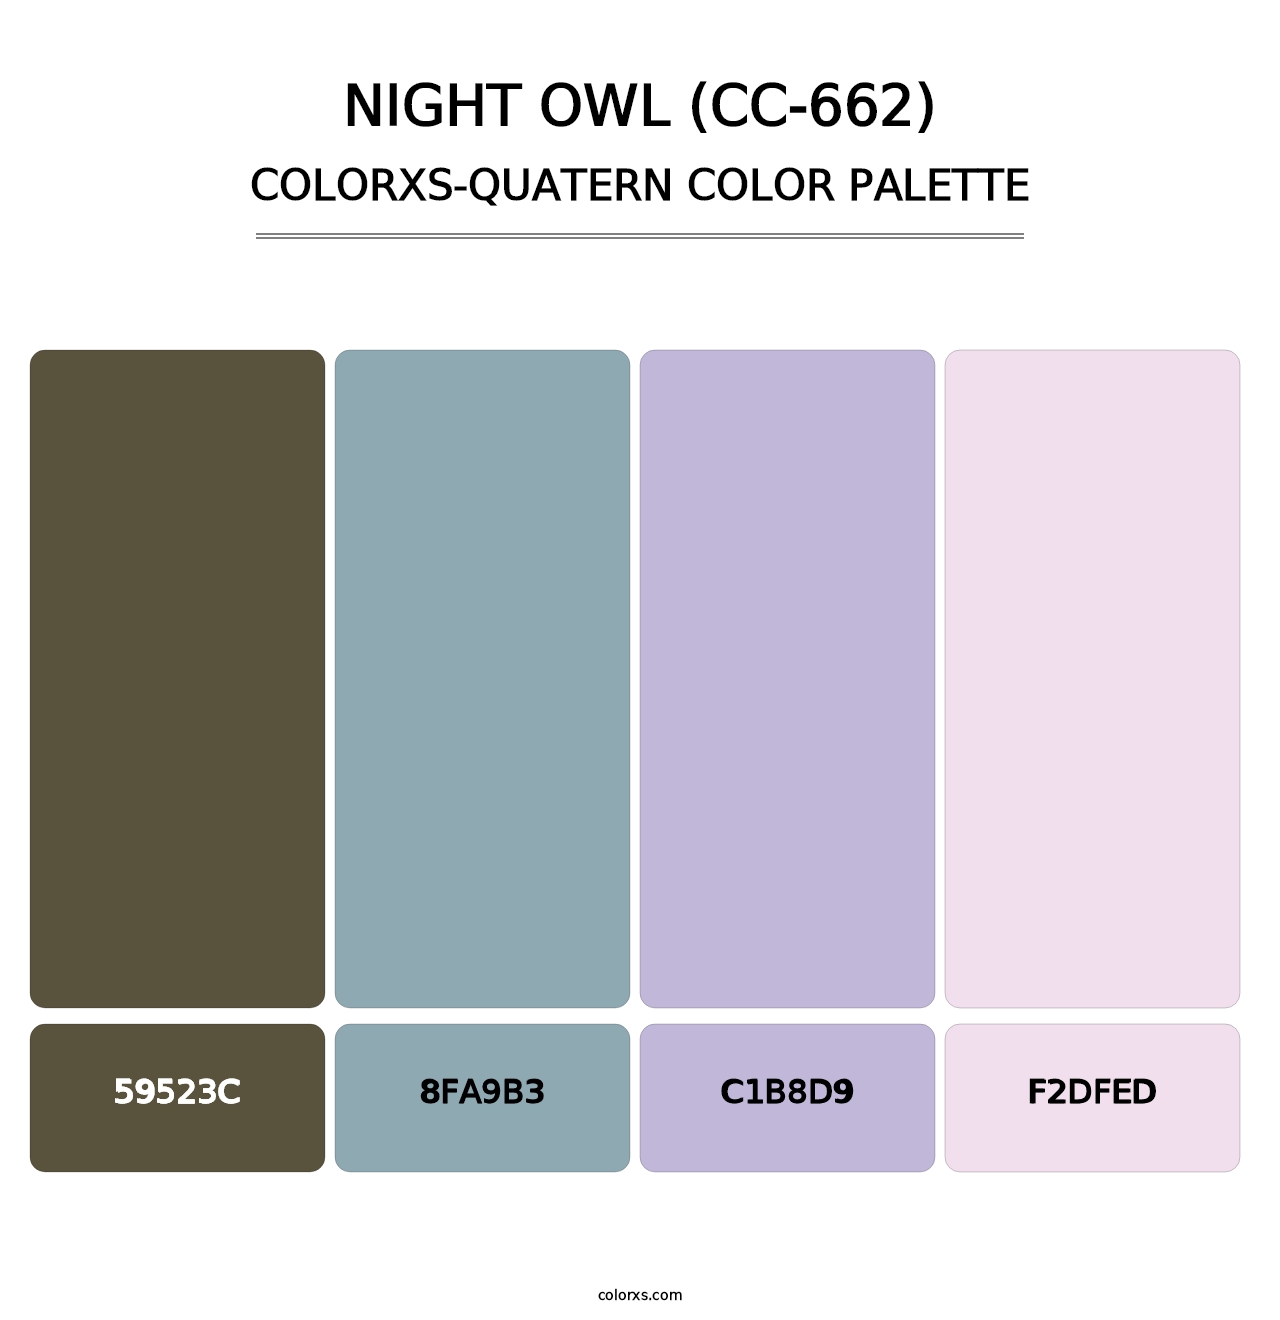 Night Owl (CC-662) - Colorxs Quatern Palette